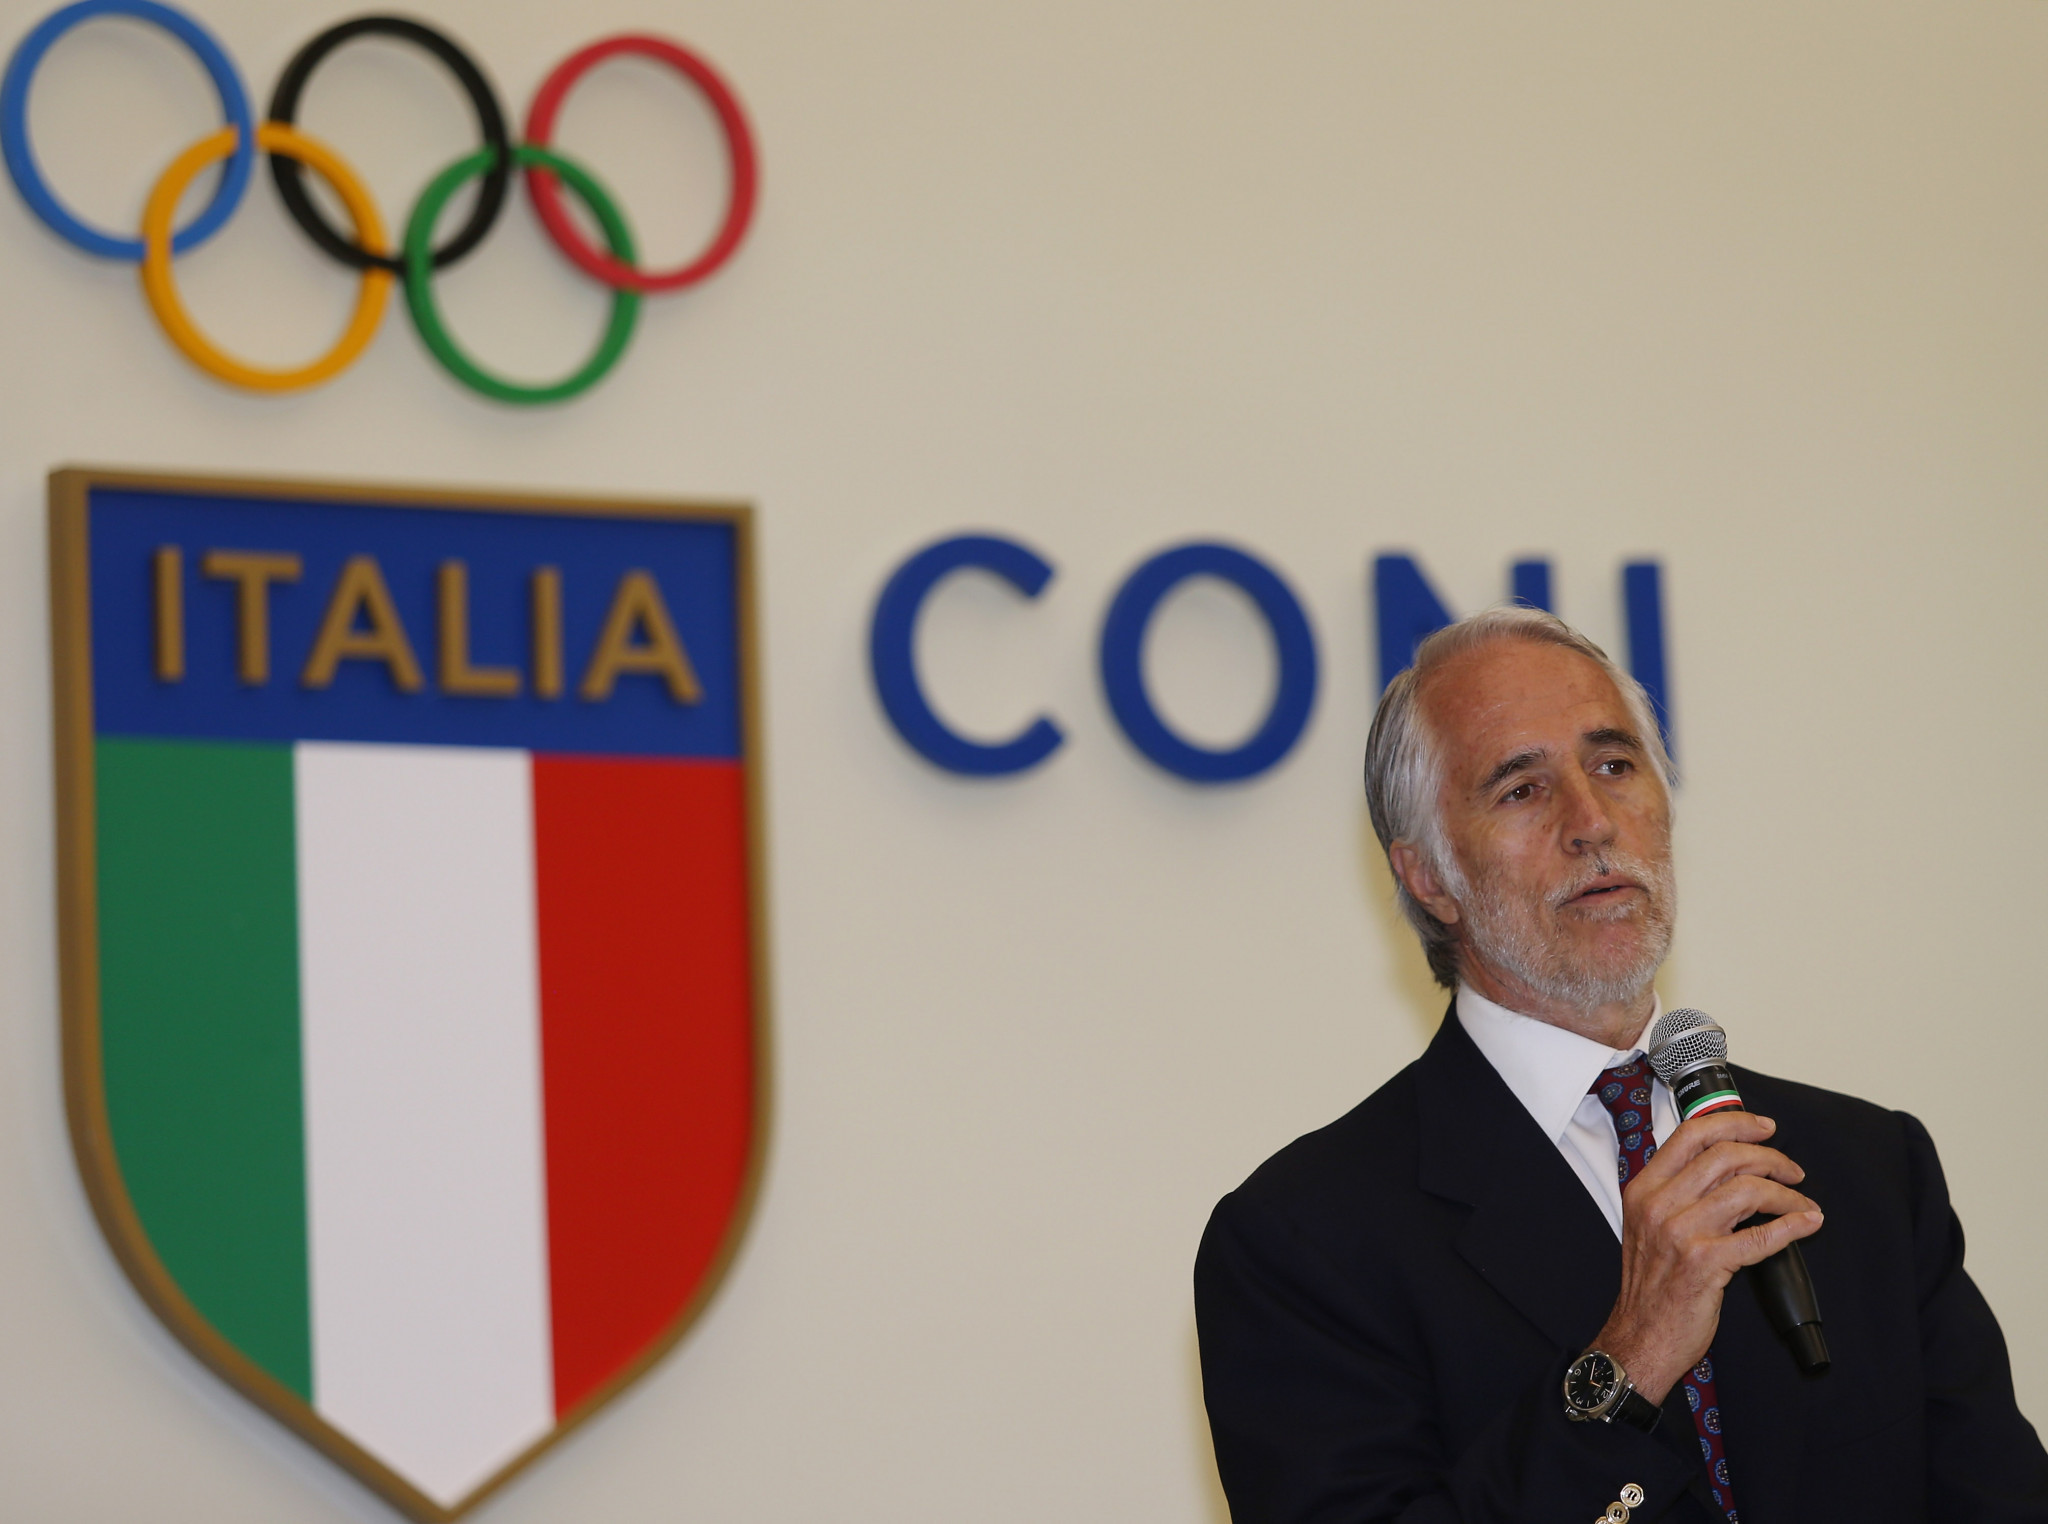 No final city choice guaranteed at key CONI meeting to discuss Italian Winter Olympic bid